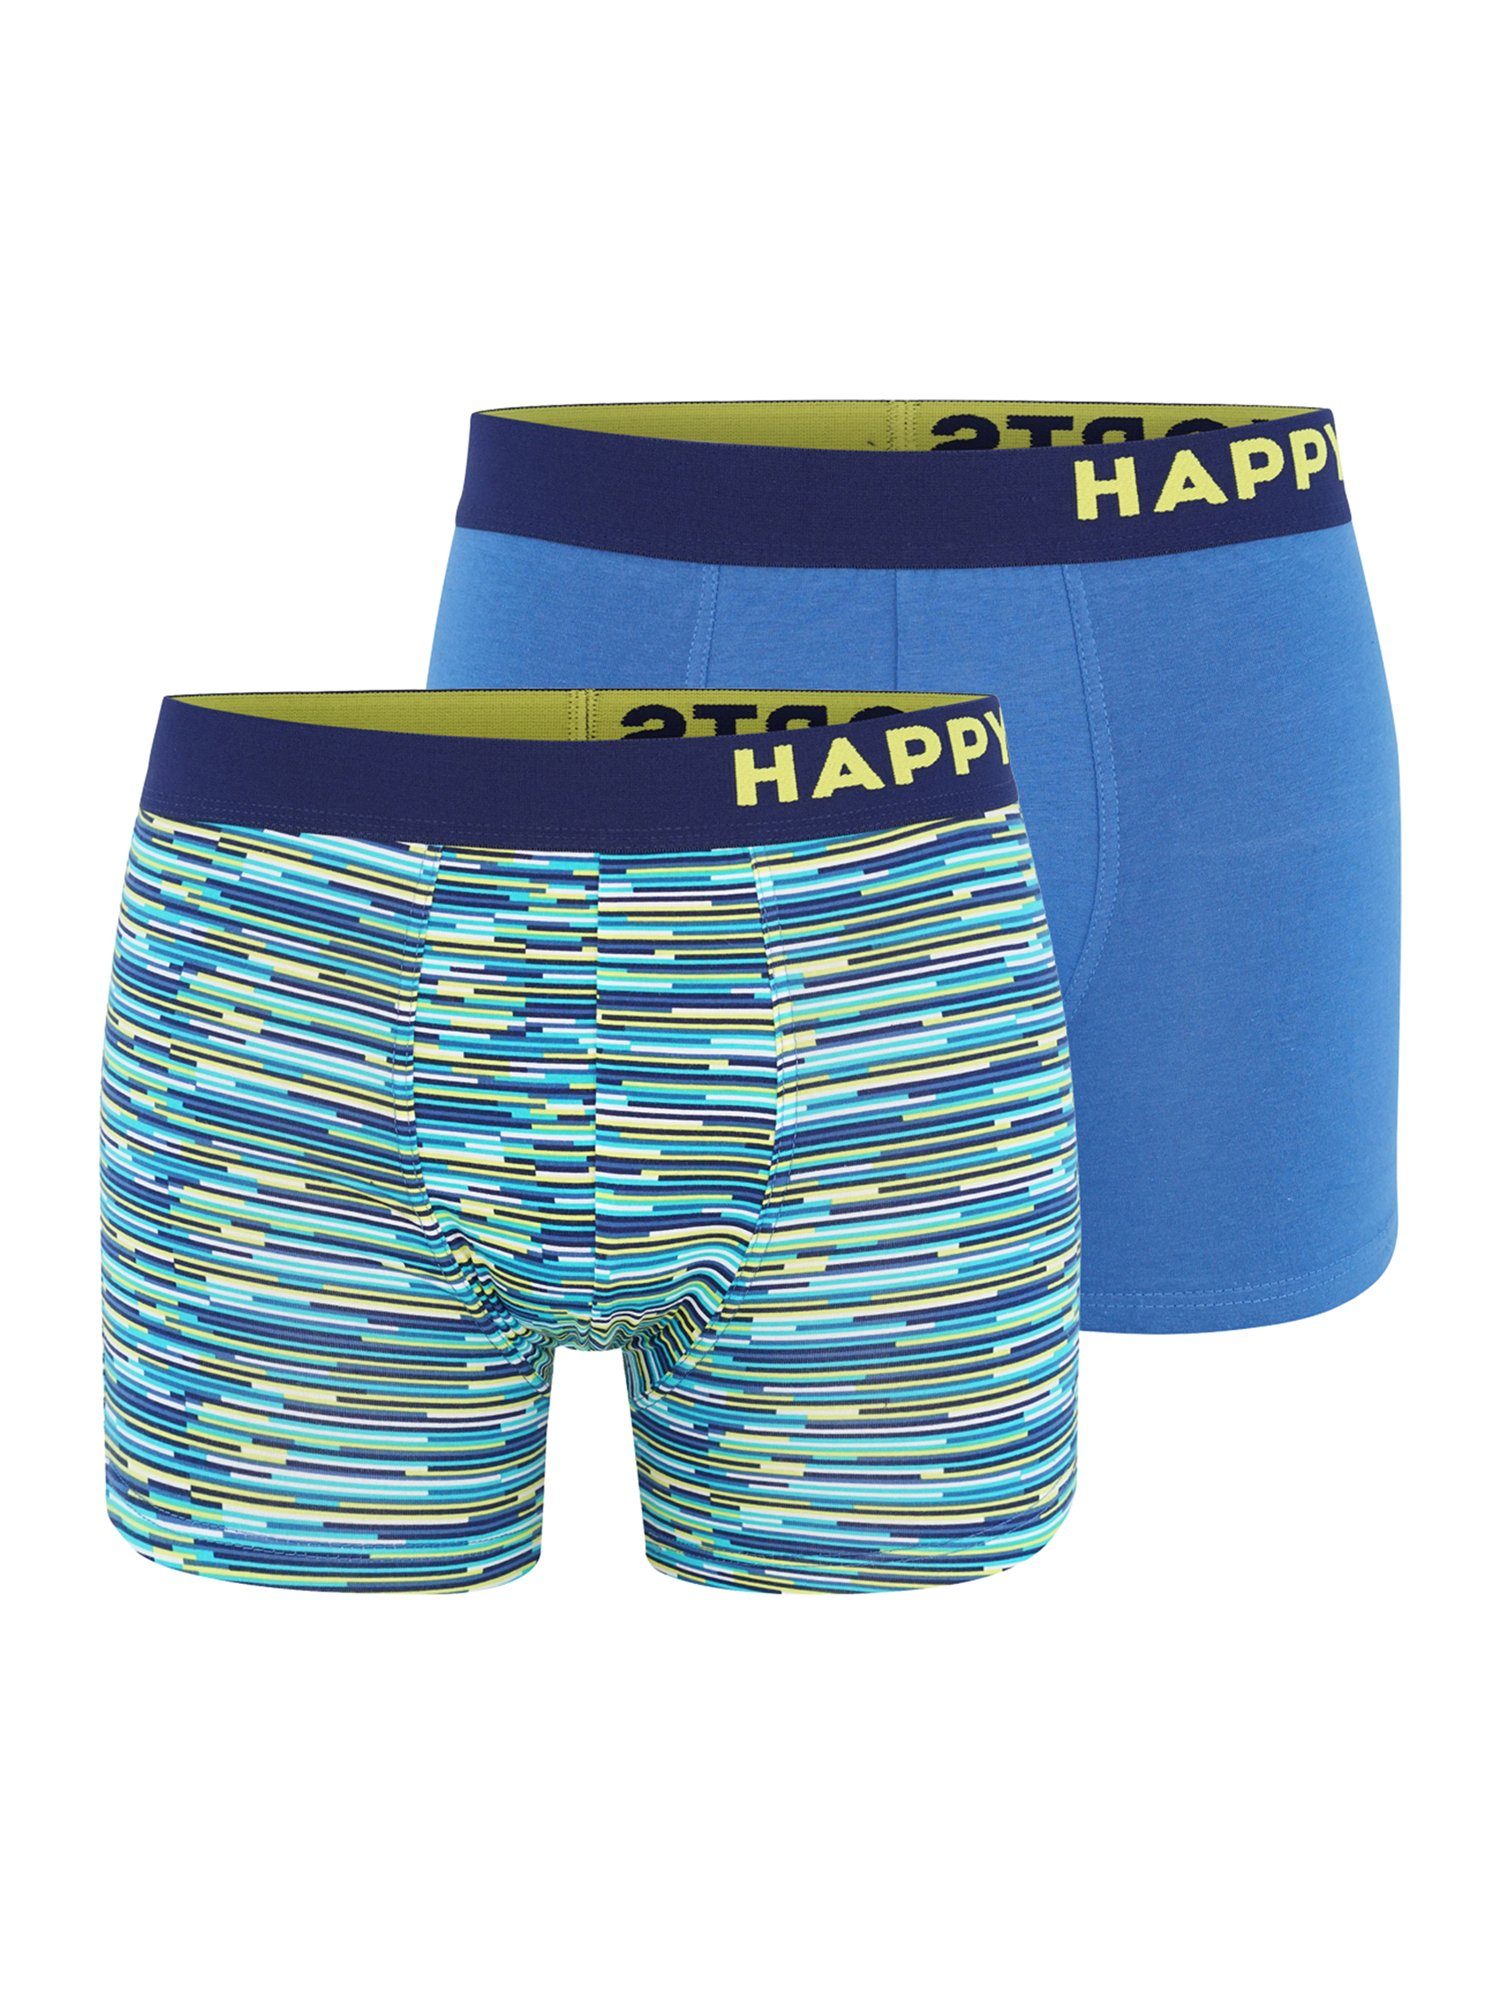 HAPPY SHORTS Retro Pants Motivprint Stripes Abstract Trunks